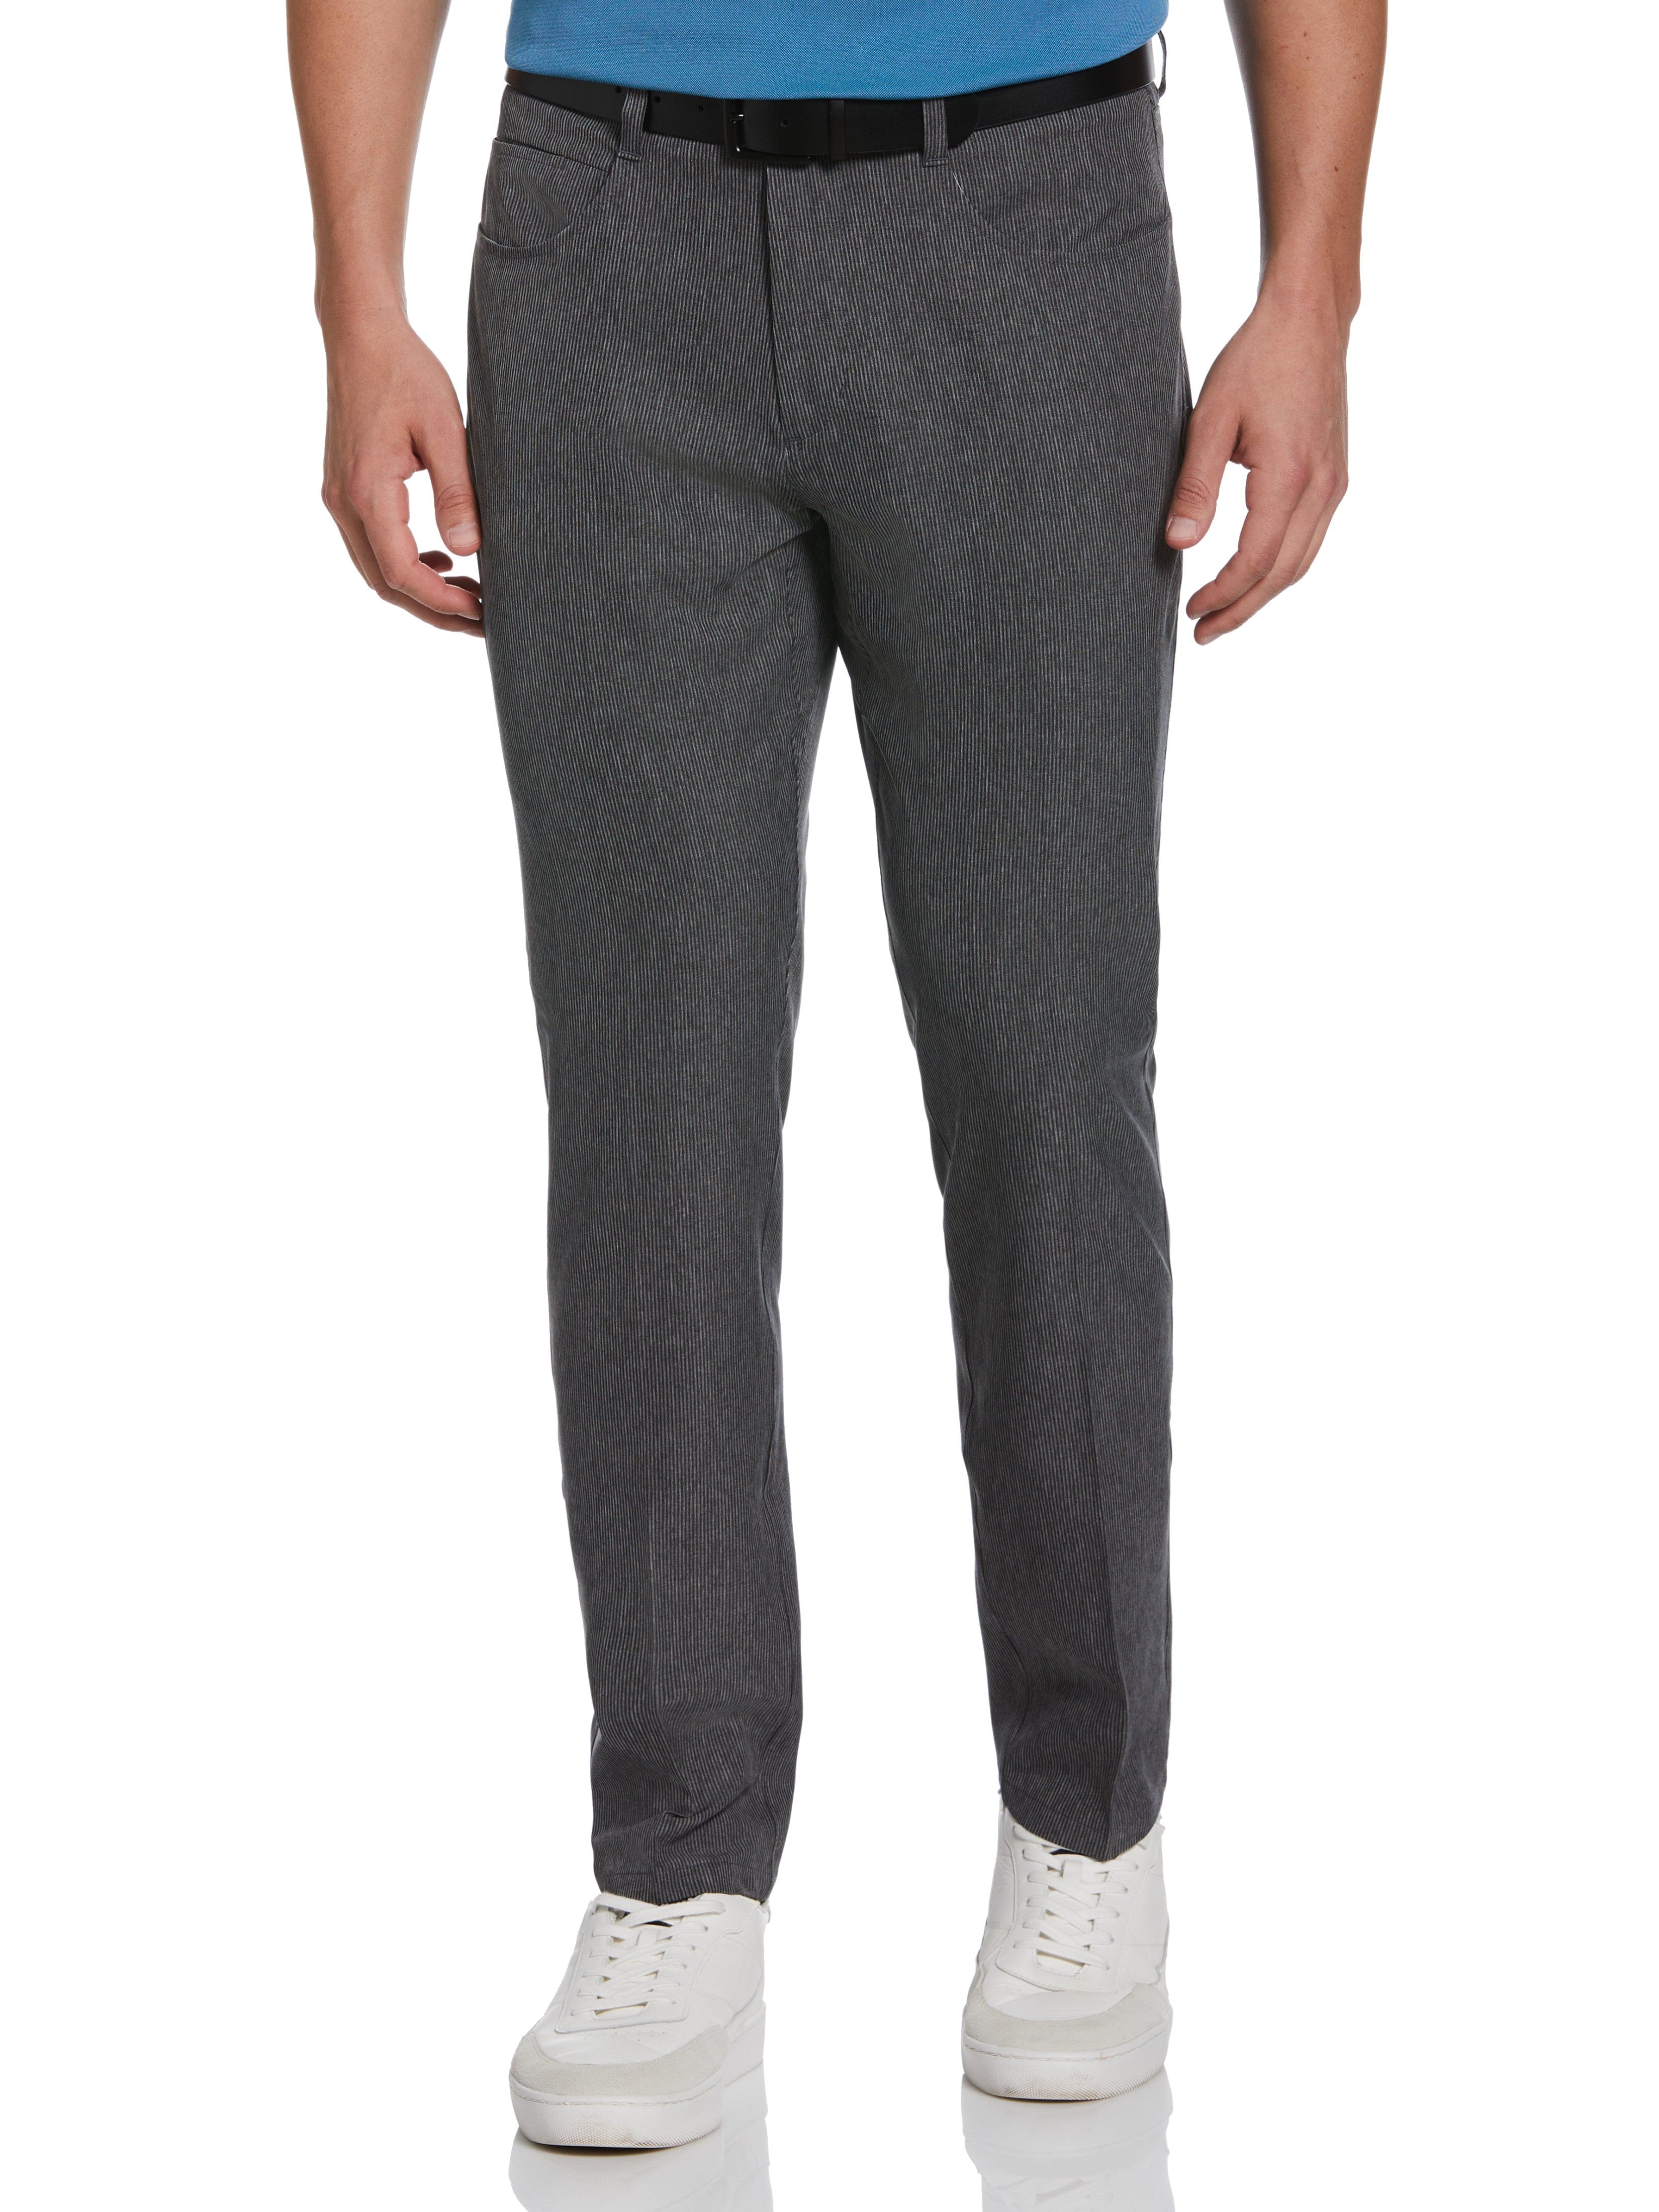 Original Penguin Mens Flat Front Fine Line Print Golf Pants, Size 36 x 30, Black, Polyester/Elastane | Golf Apparel Shop